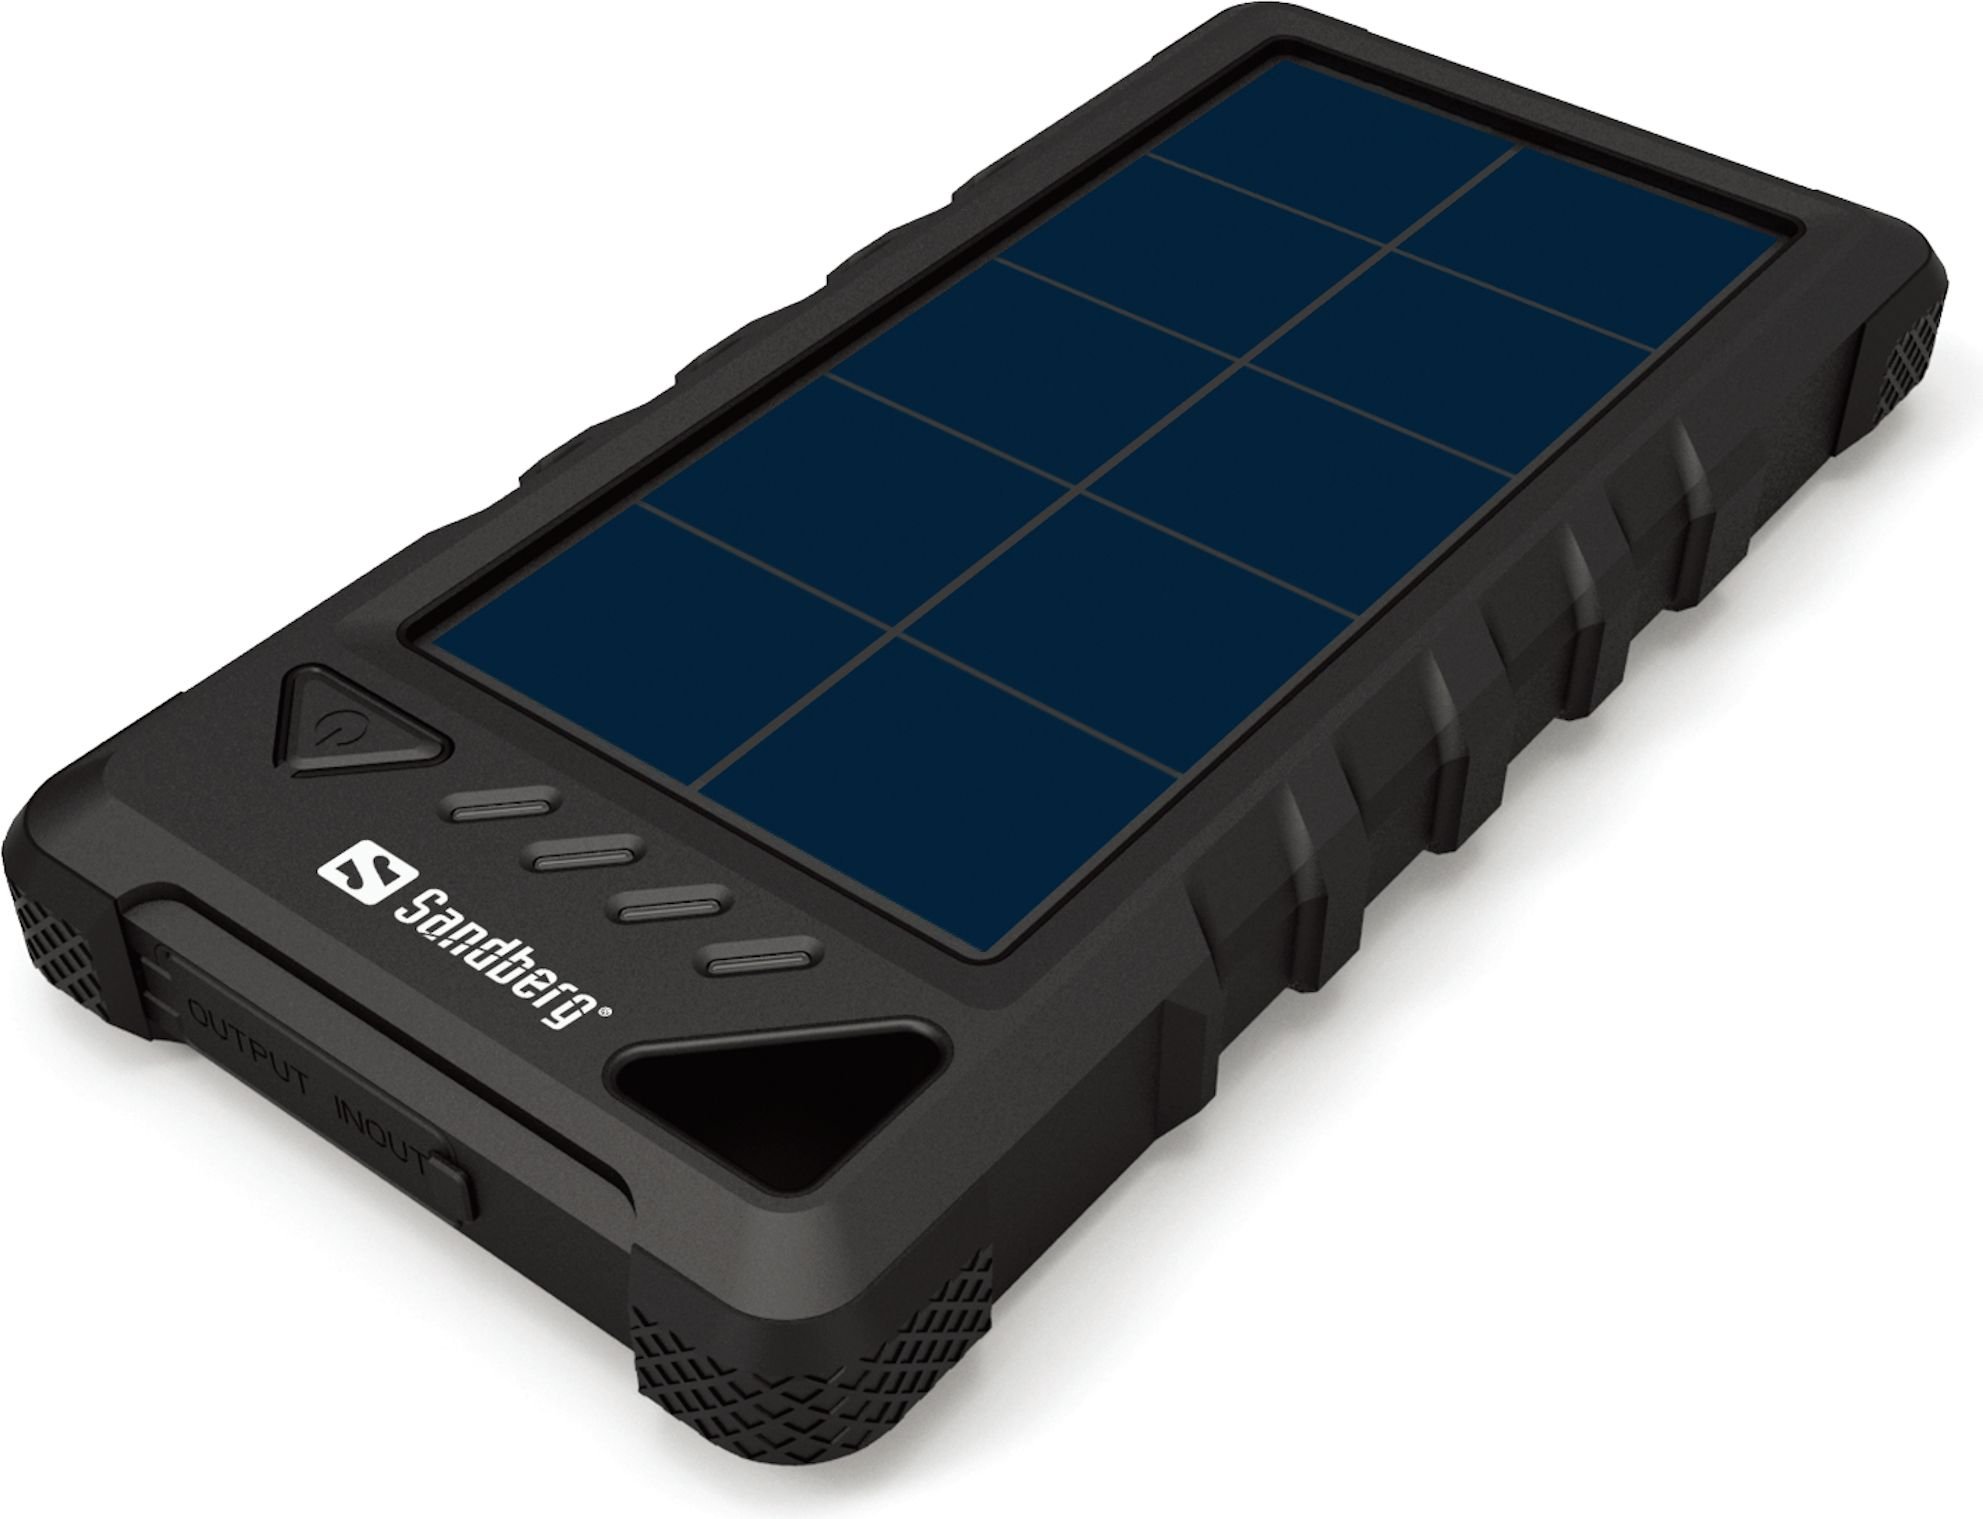 Incarcator Solar & Powerbank Sandberg 420-35 Outdoor Solar Powerbank 16000